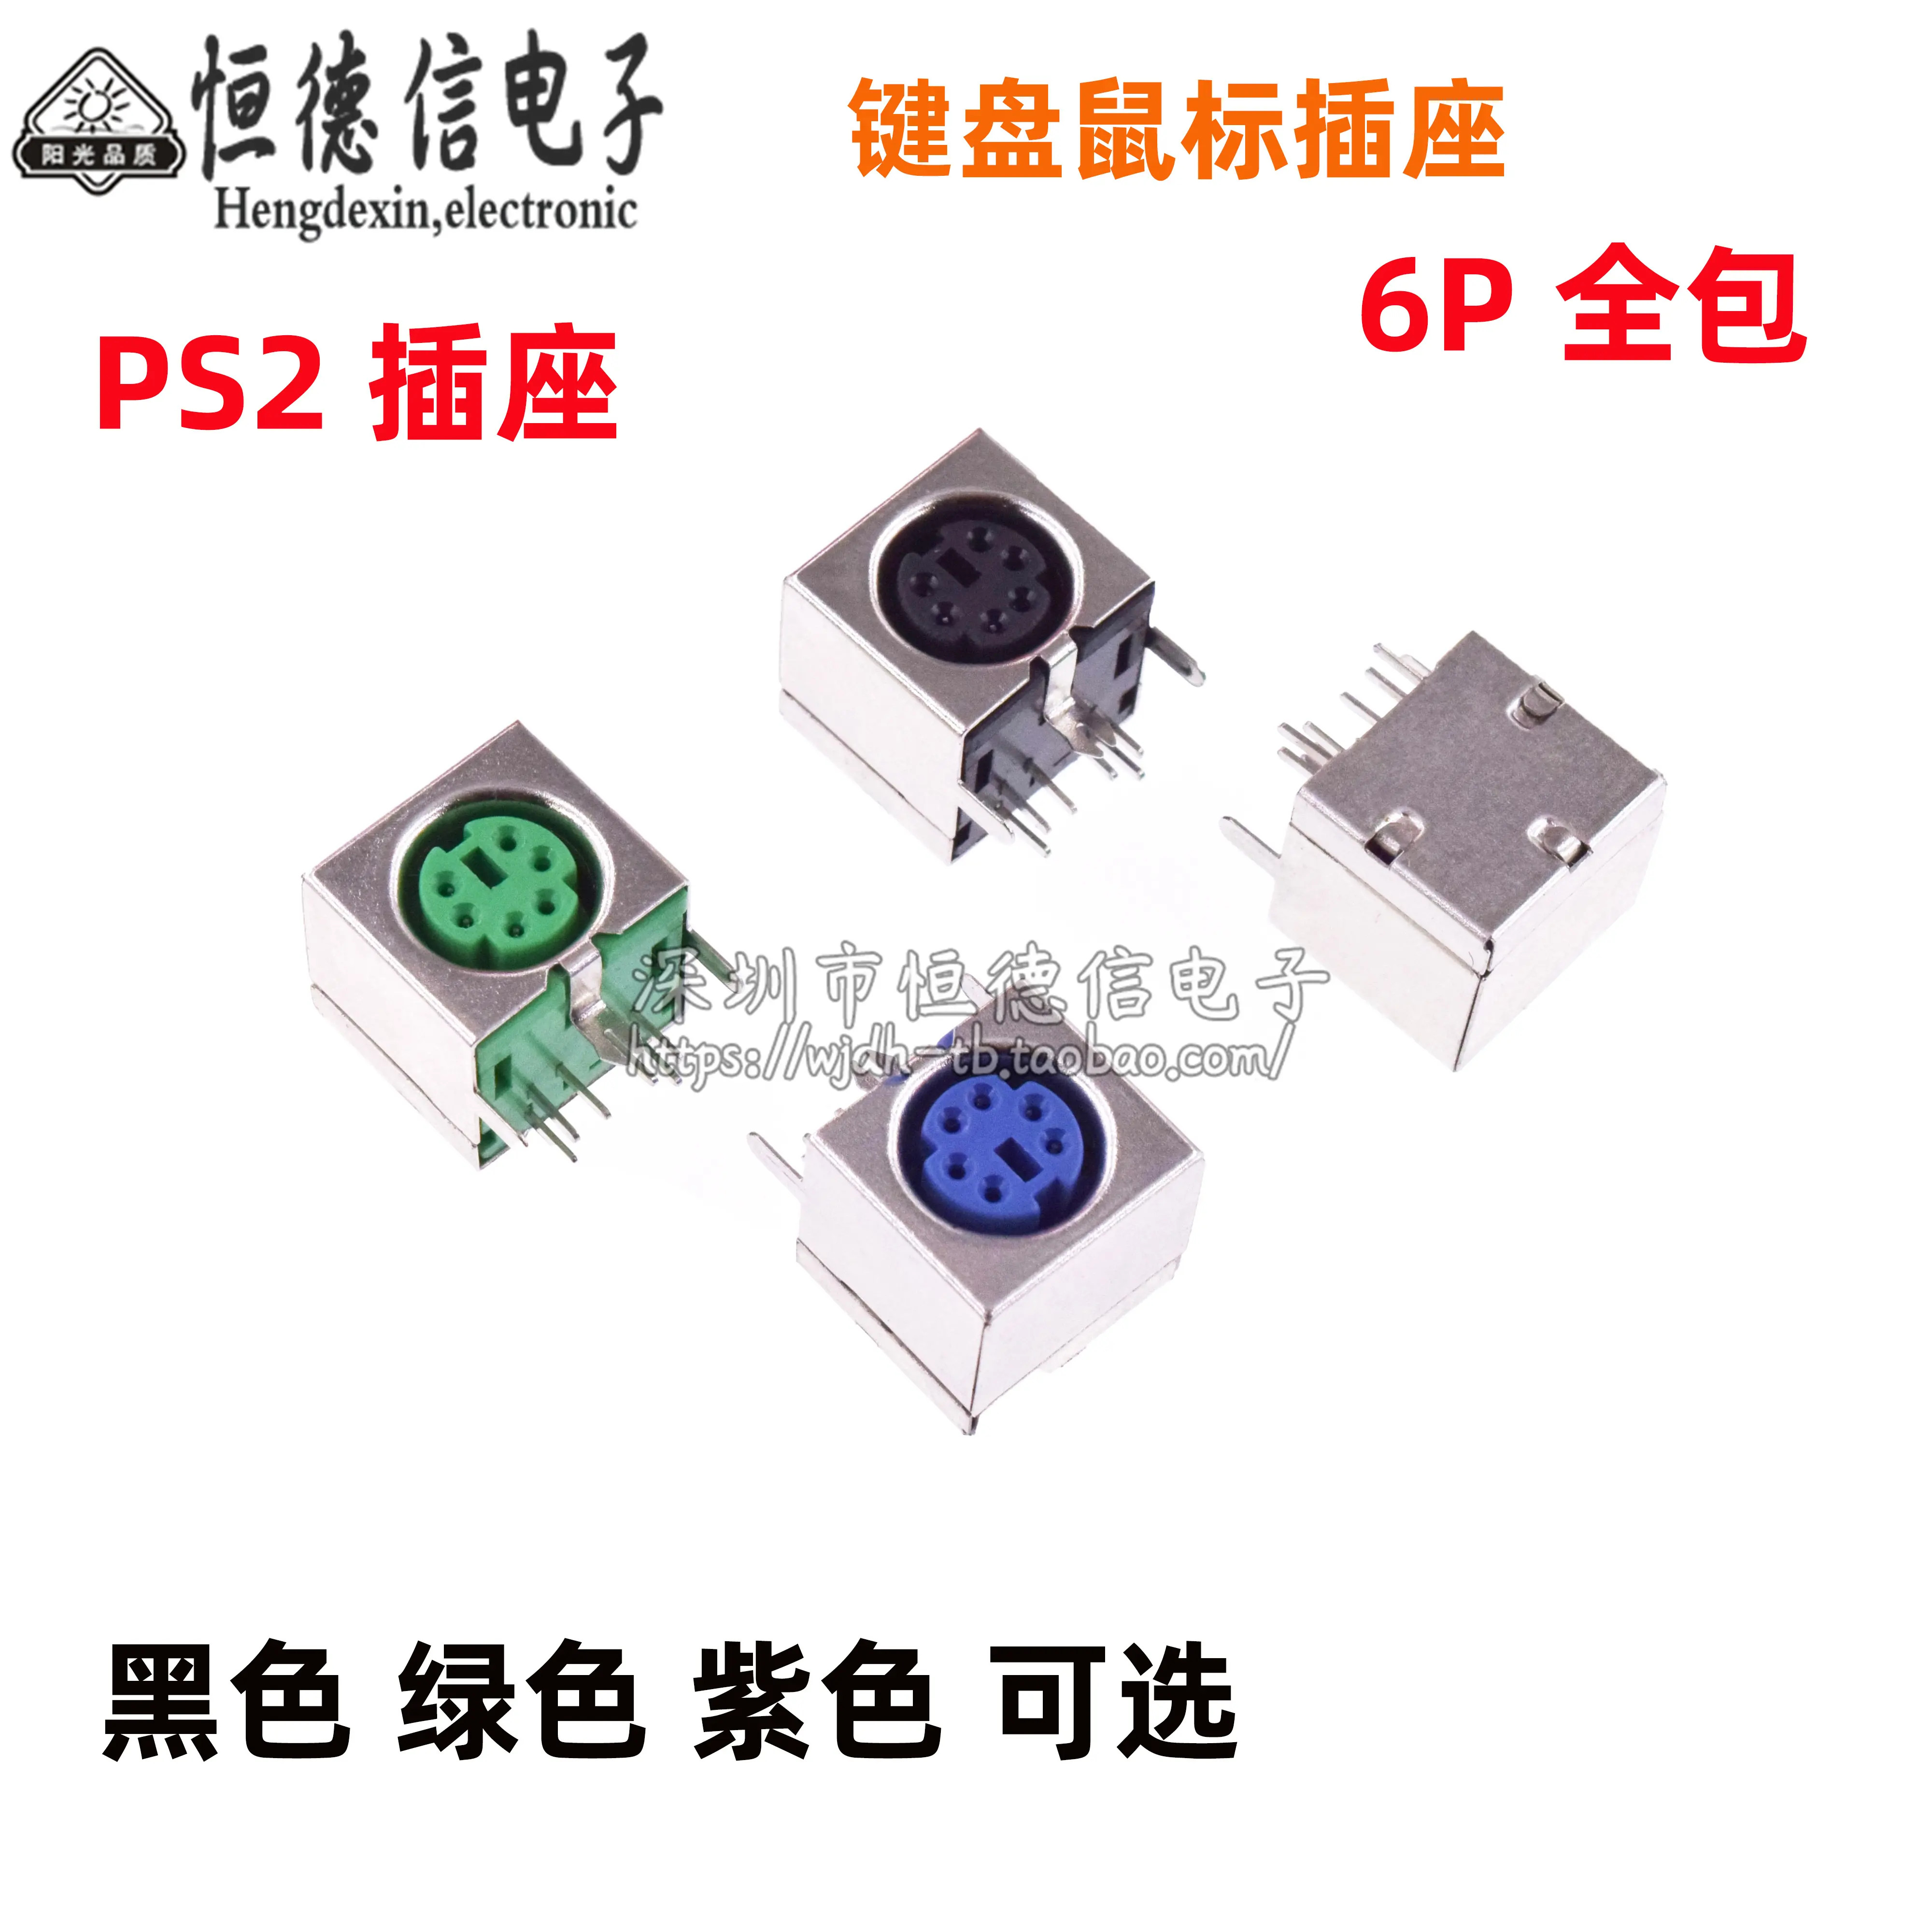 Ps2 Socket 6P Purple Green Black Keyboard-Seat Keyboard Mouse Socket PS-2 Interface S Terminal All-Inclusive